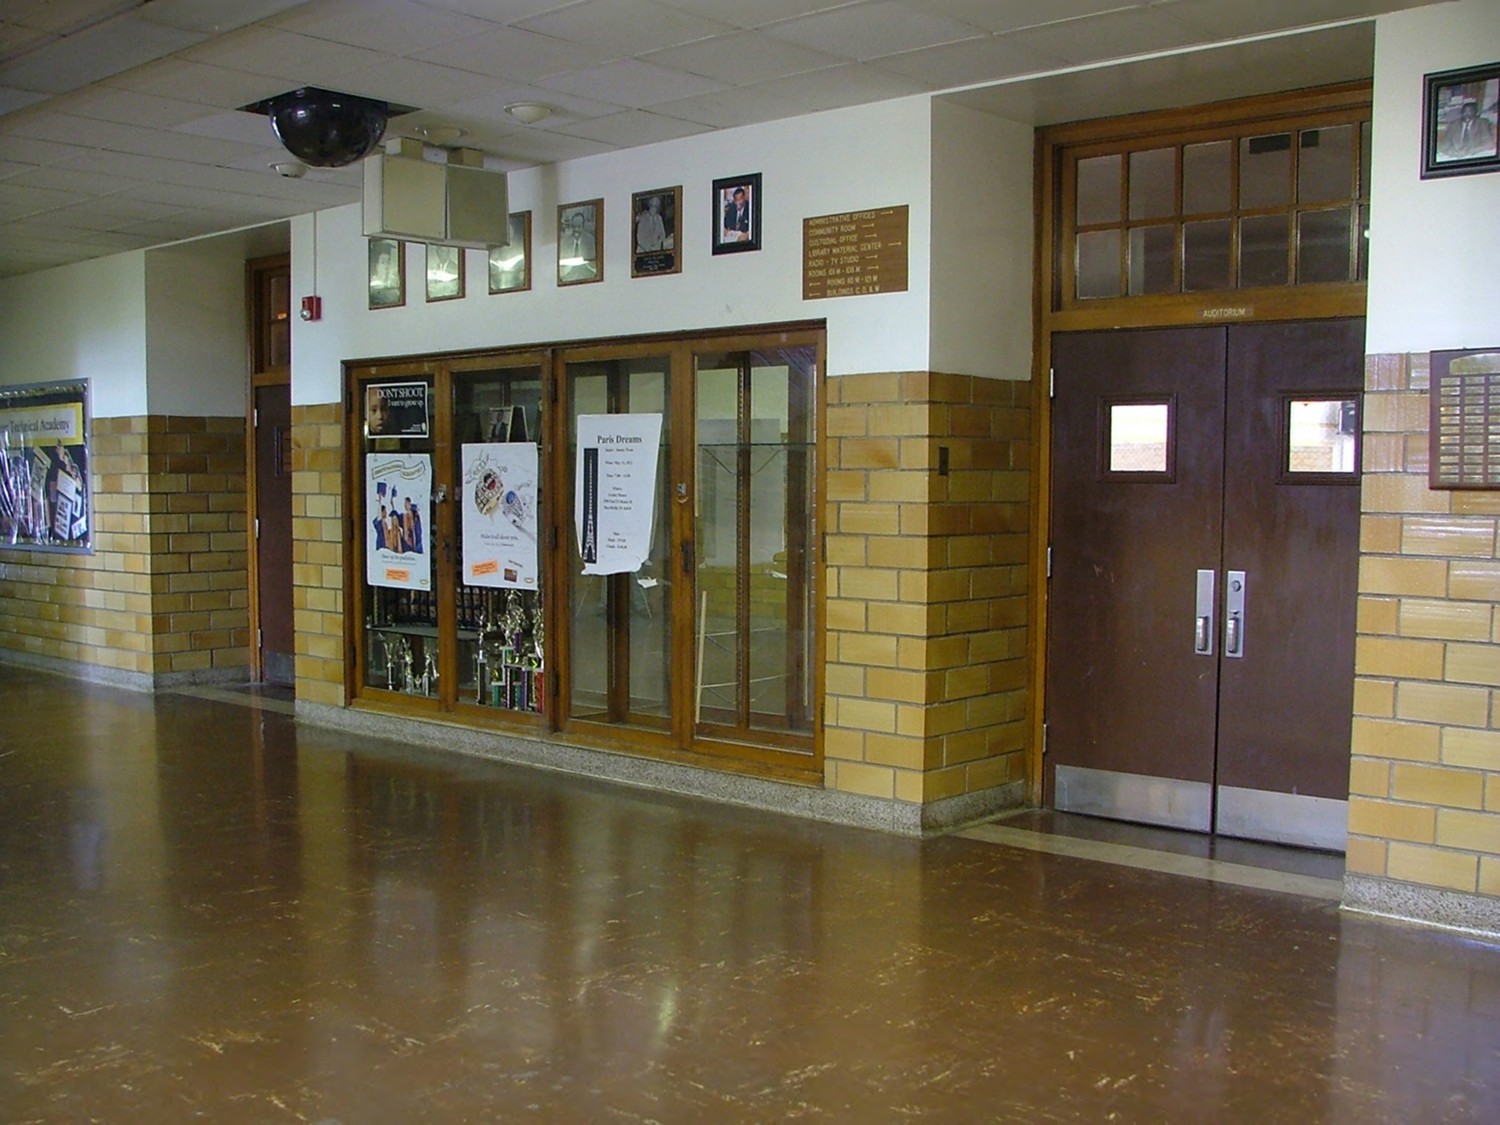 Theodore Roosevelt High School, Gary Indiana Trophy case, second floor hallway. Camera facing north (2012)